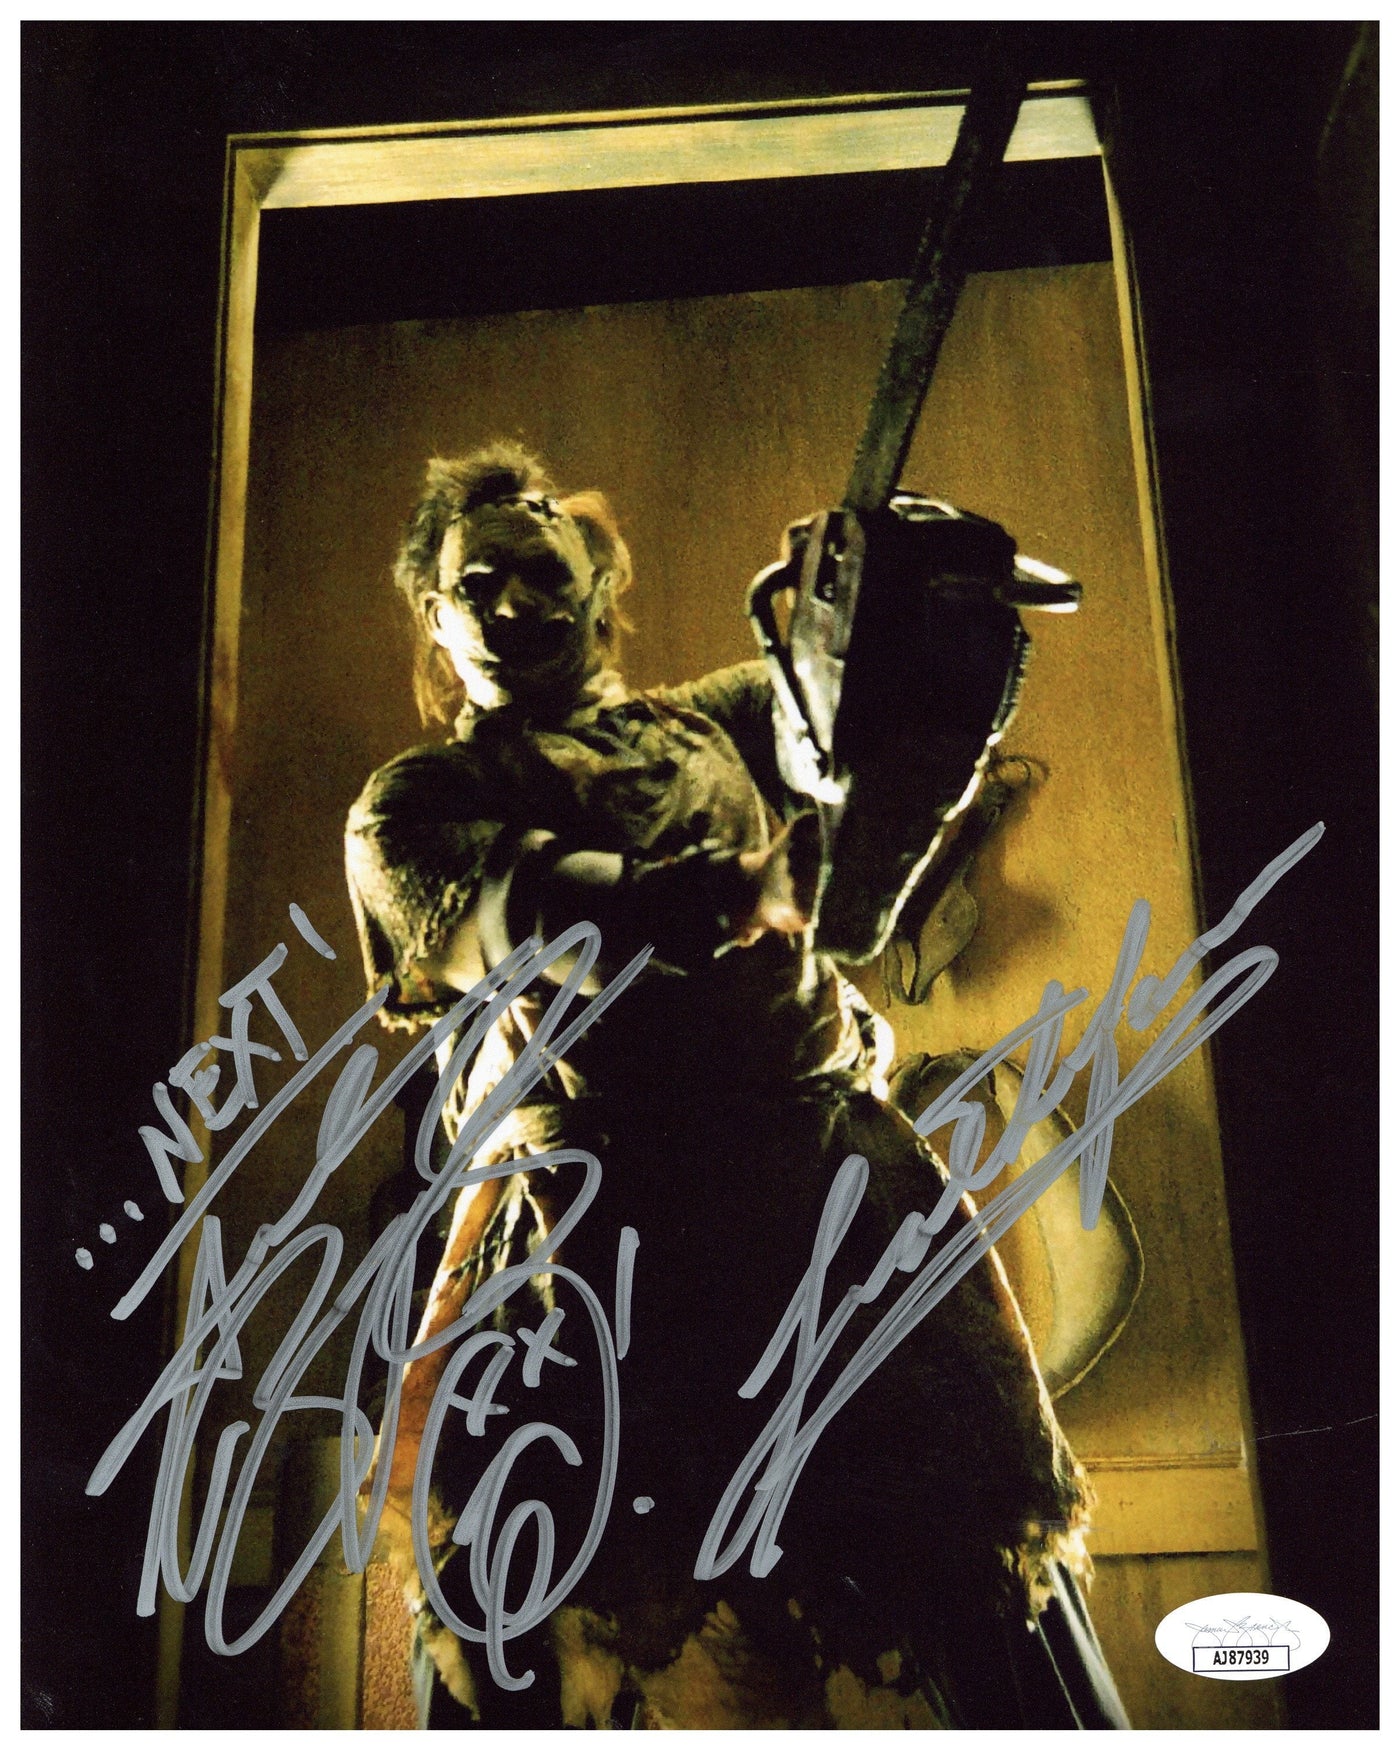 Andrew Bryniarski Signed 8x10 Photo Texas Chainsaw Massacre Leatherface Auto JSA 2